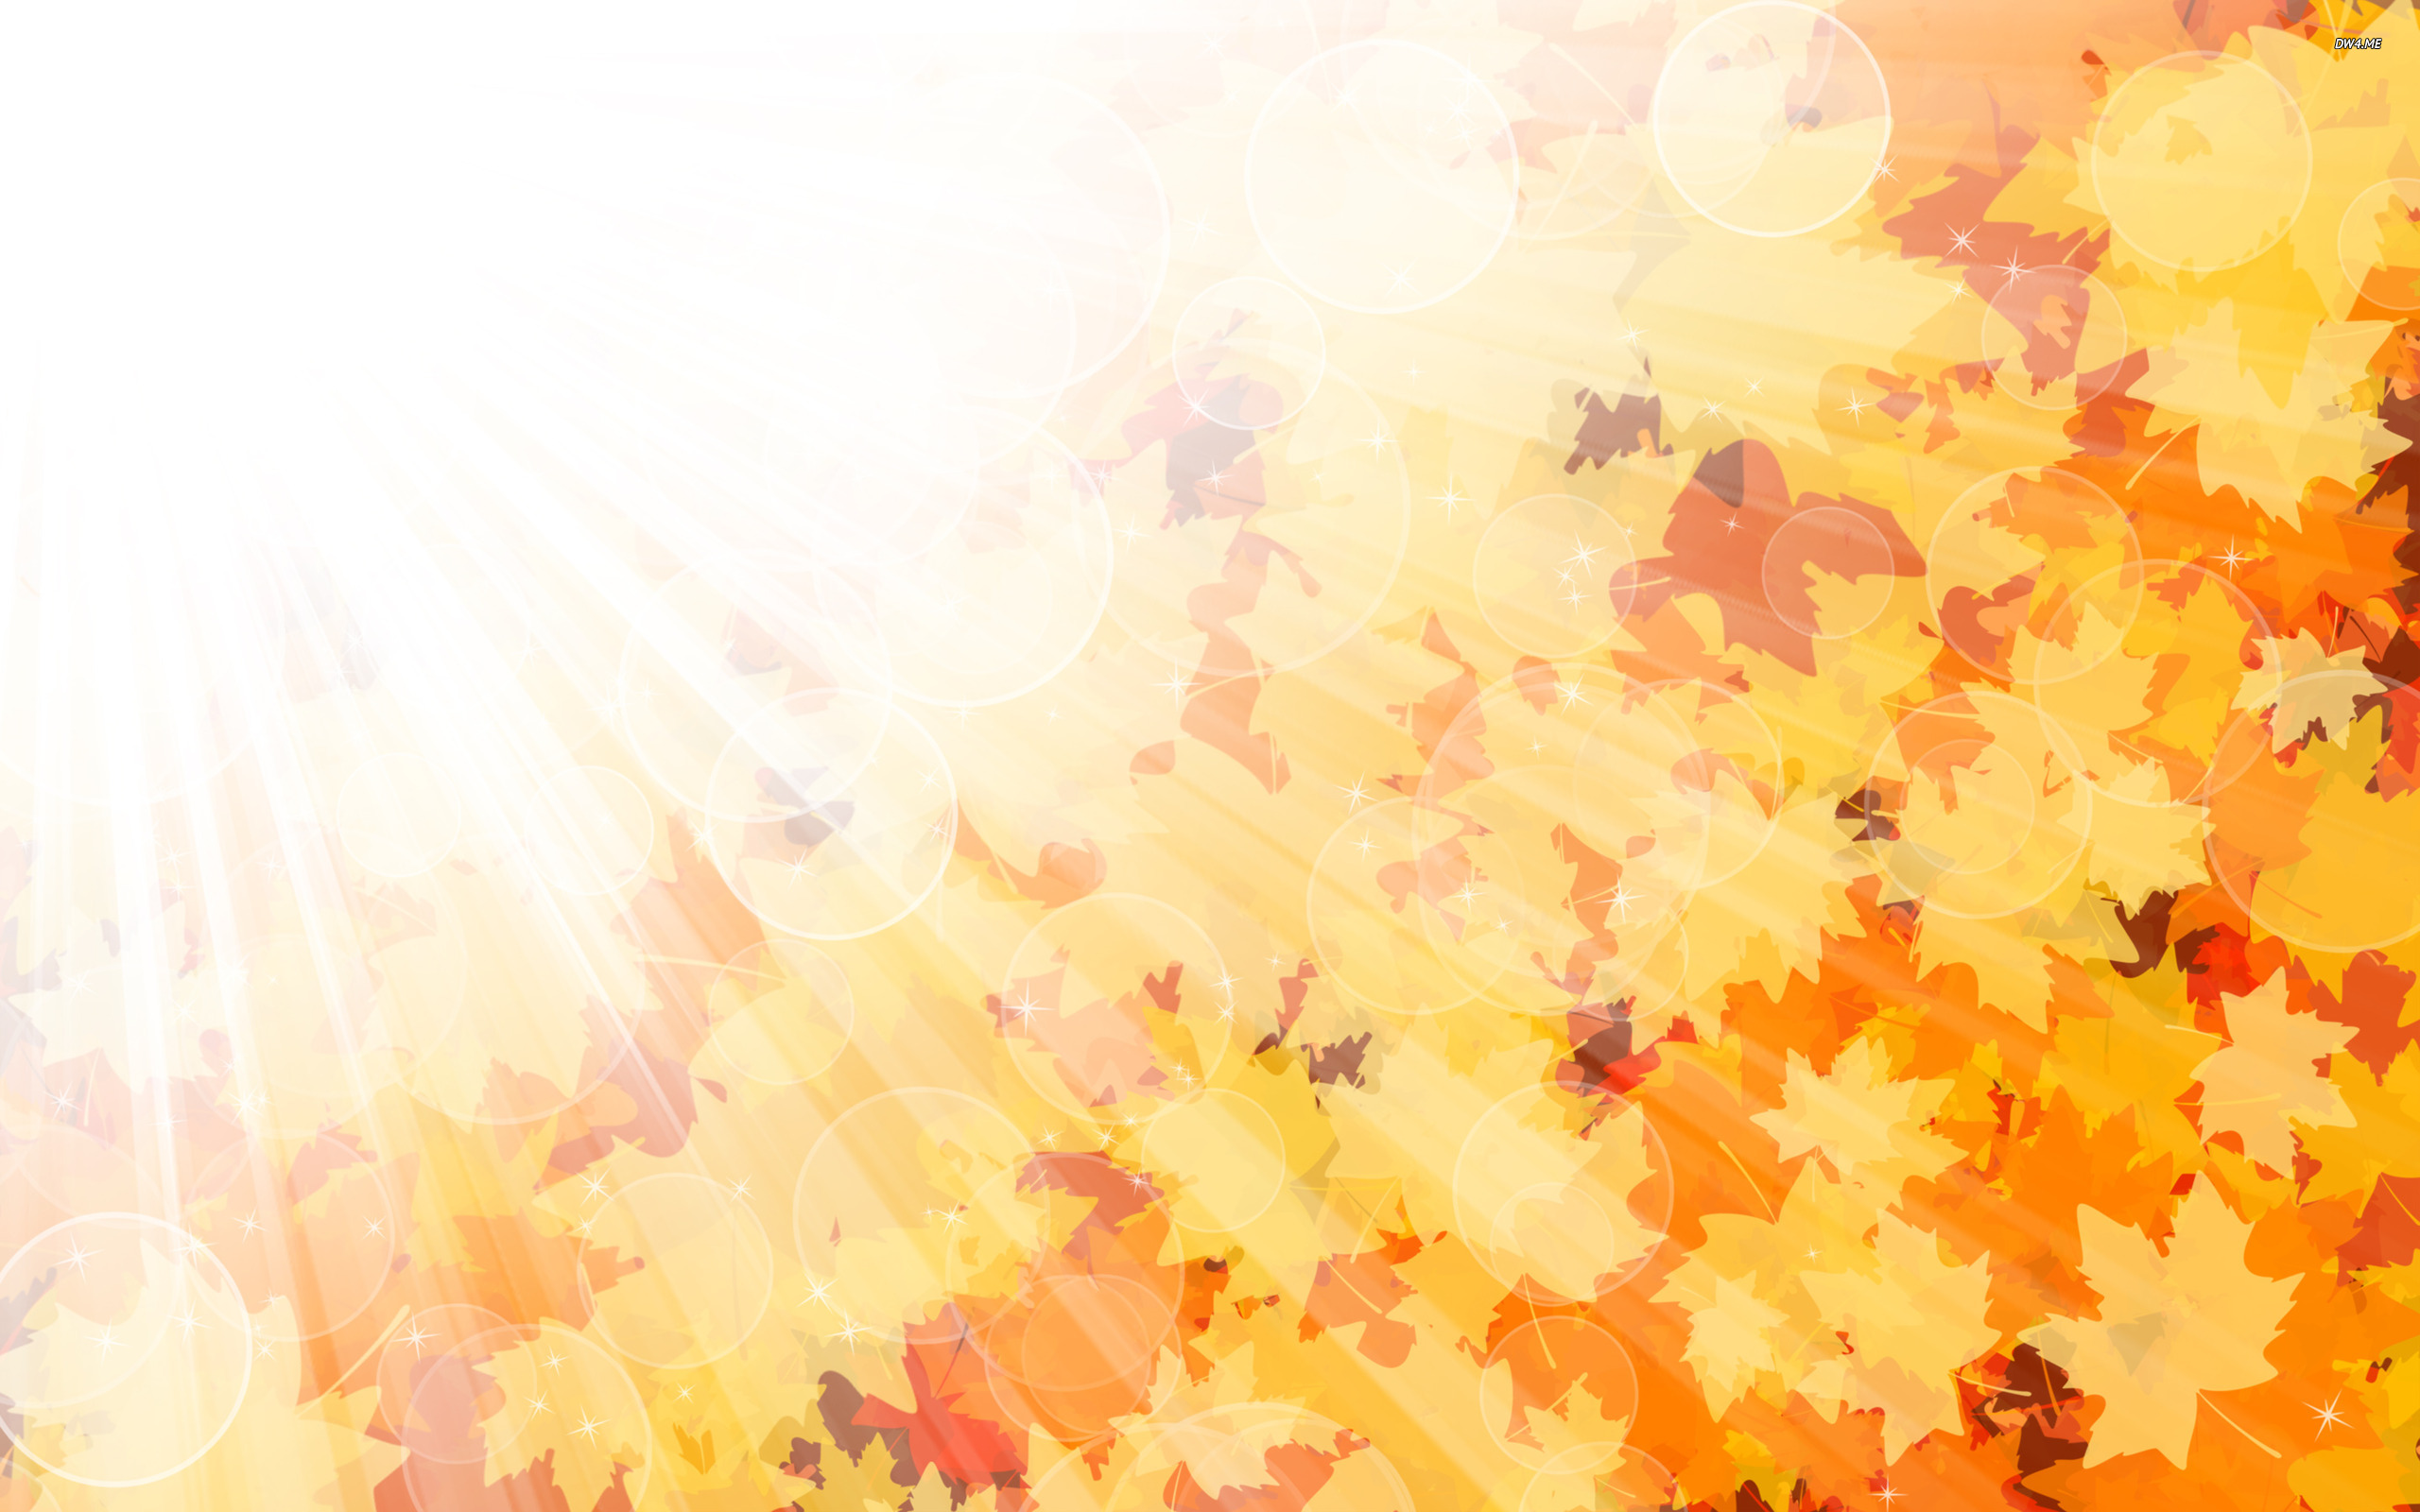 Autumn leaves in the sunshine wallpaper - Digital Art wallpapers